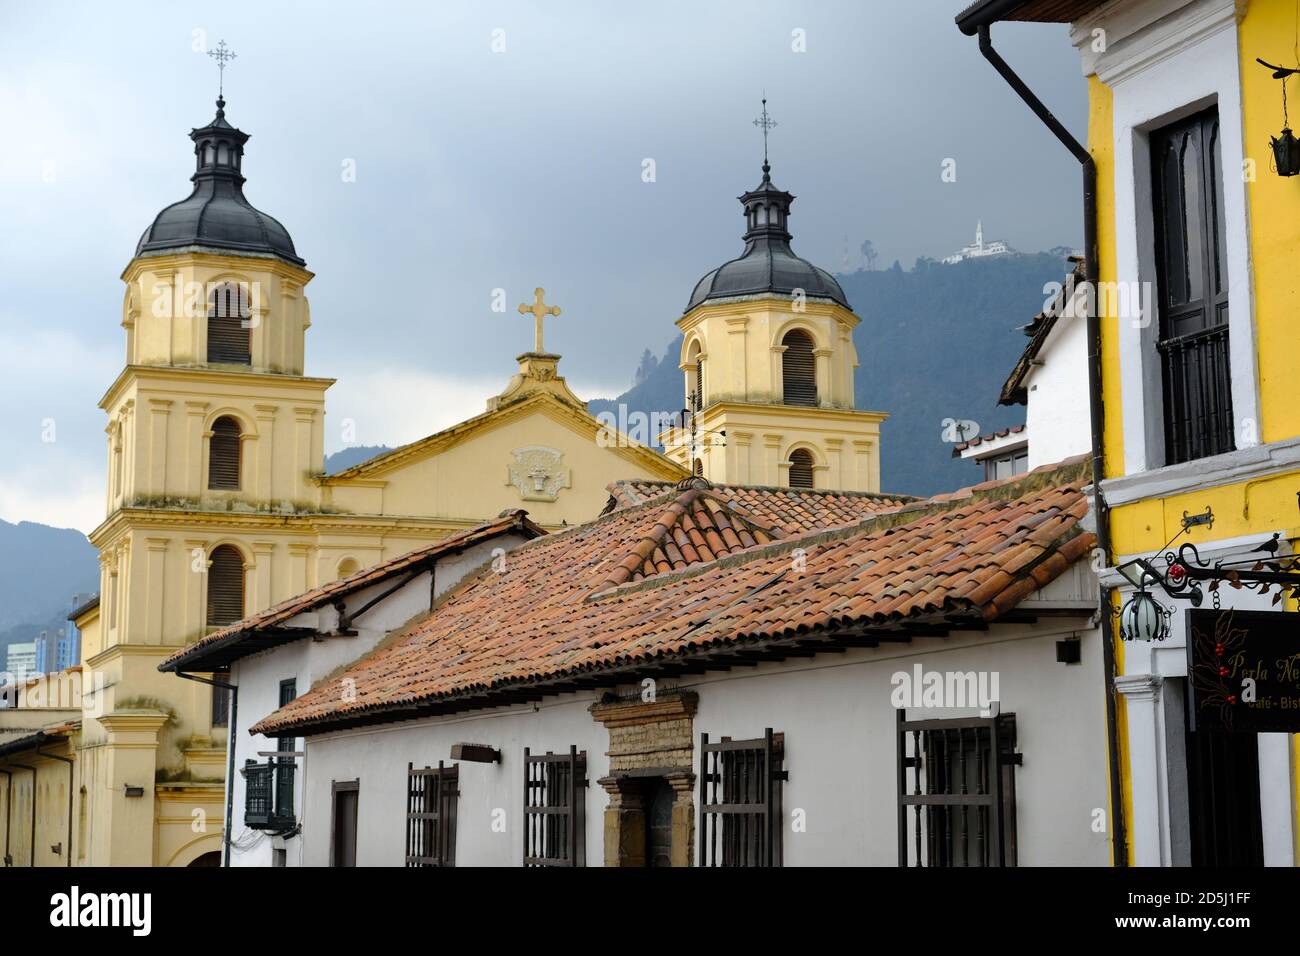 Colombia Bogota - Historic town colonial architecture Stock Photo